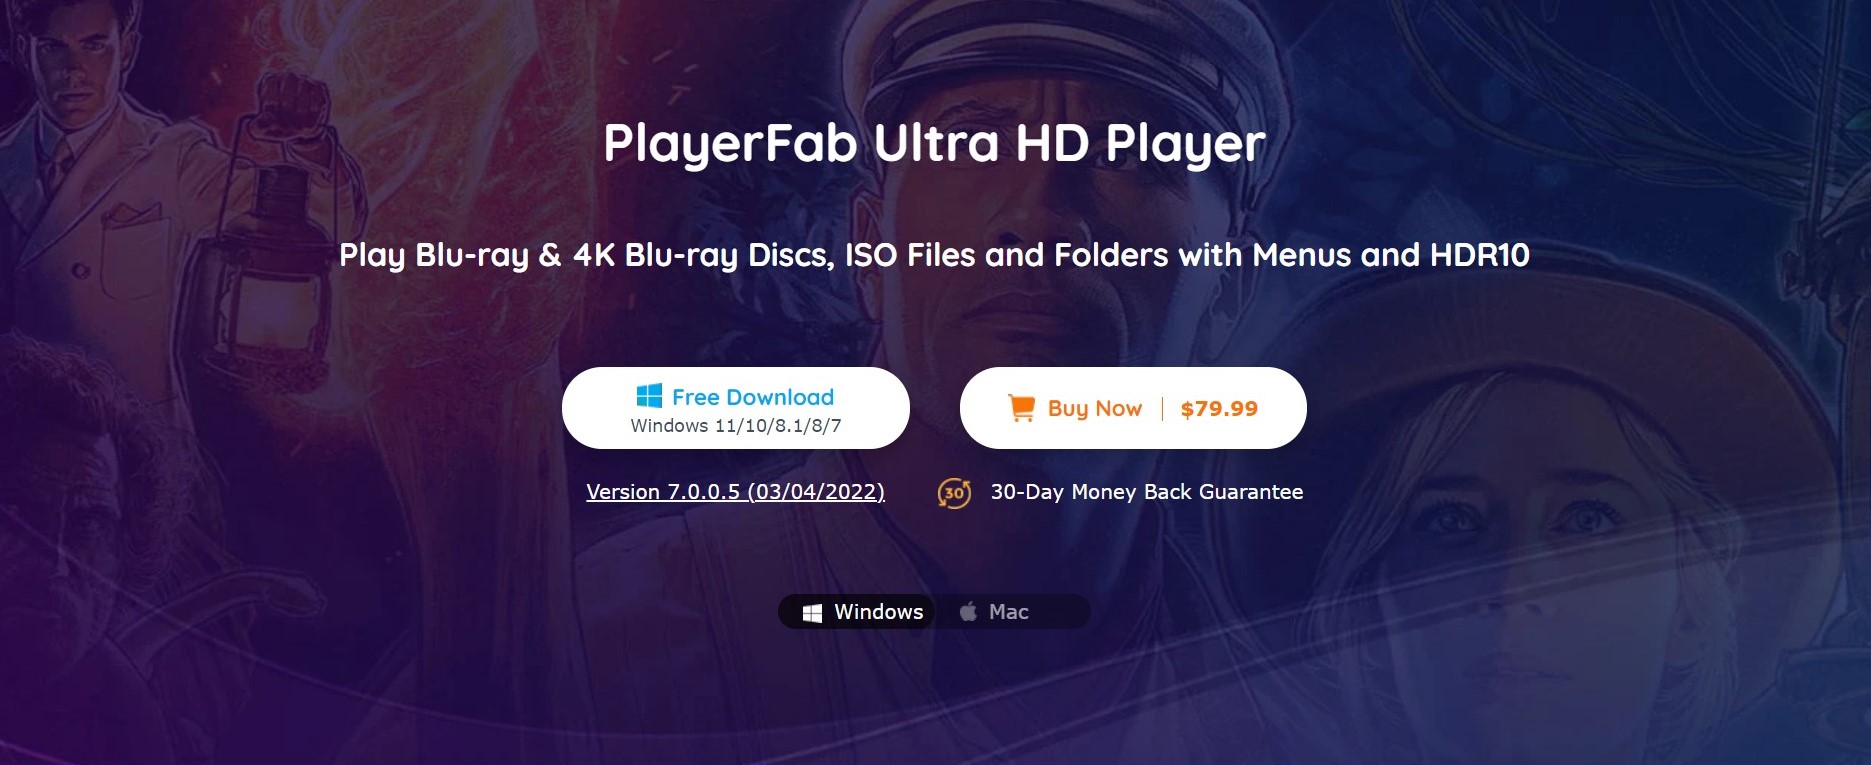 PlayerFab Ultra HD Player